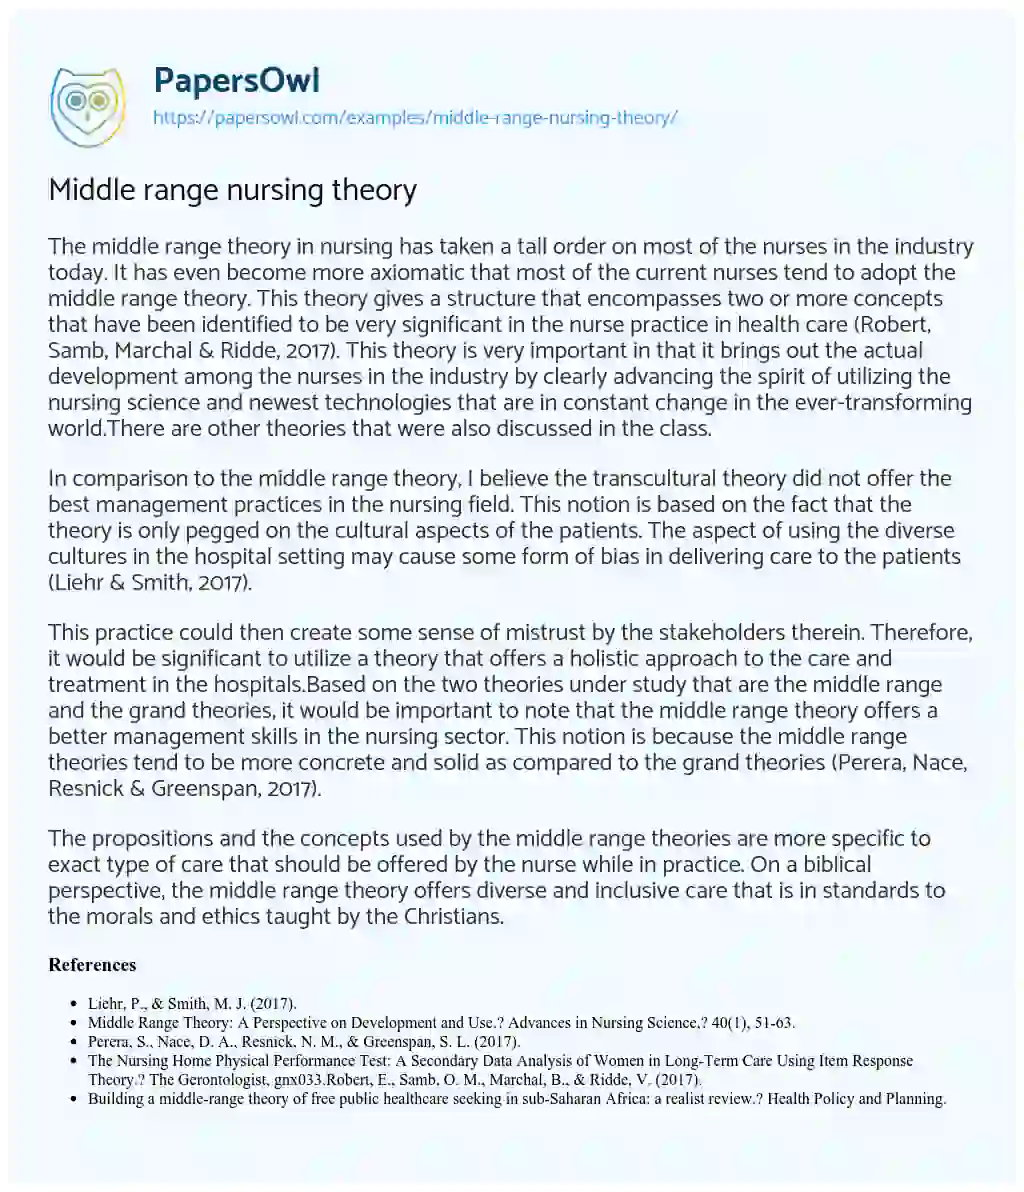 Essay on Middle Range Nursing Theory